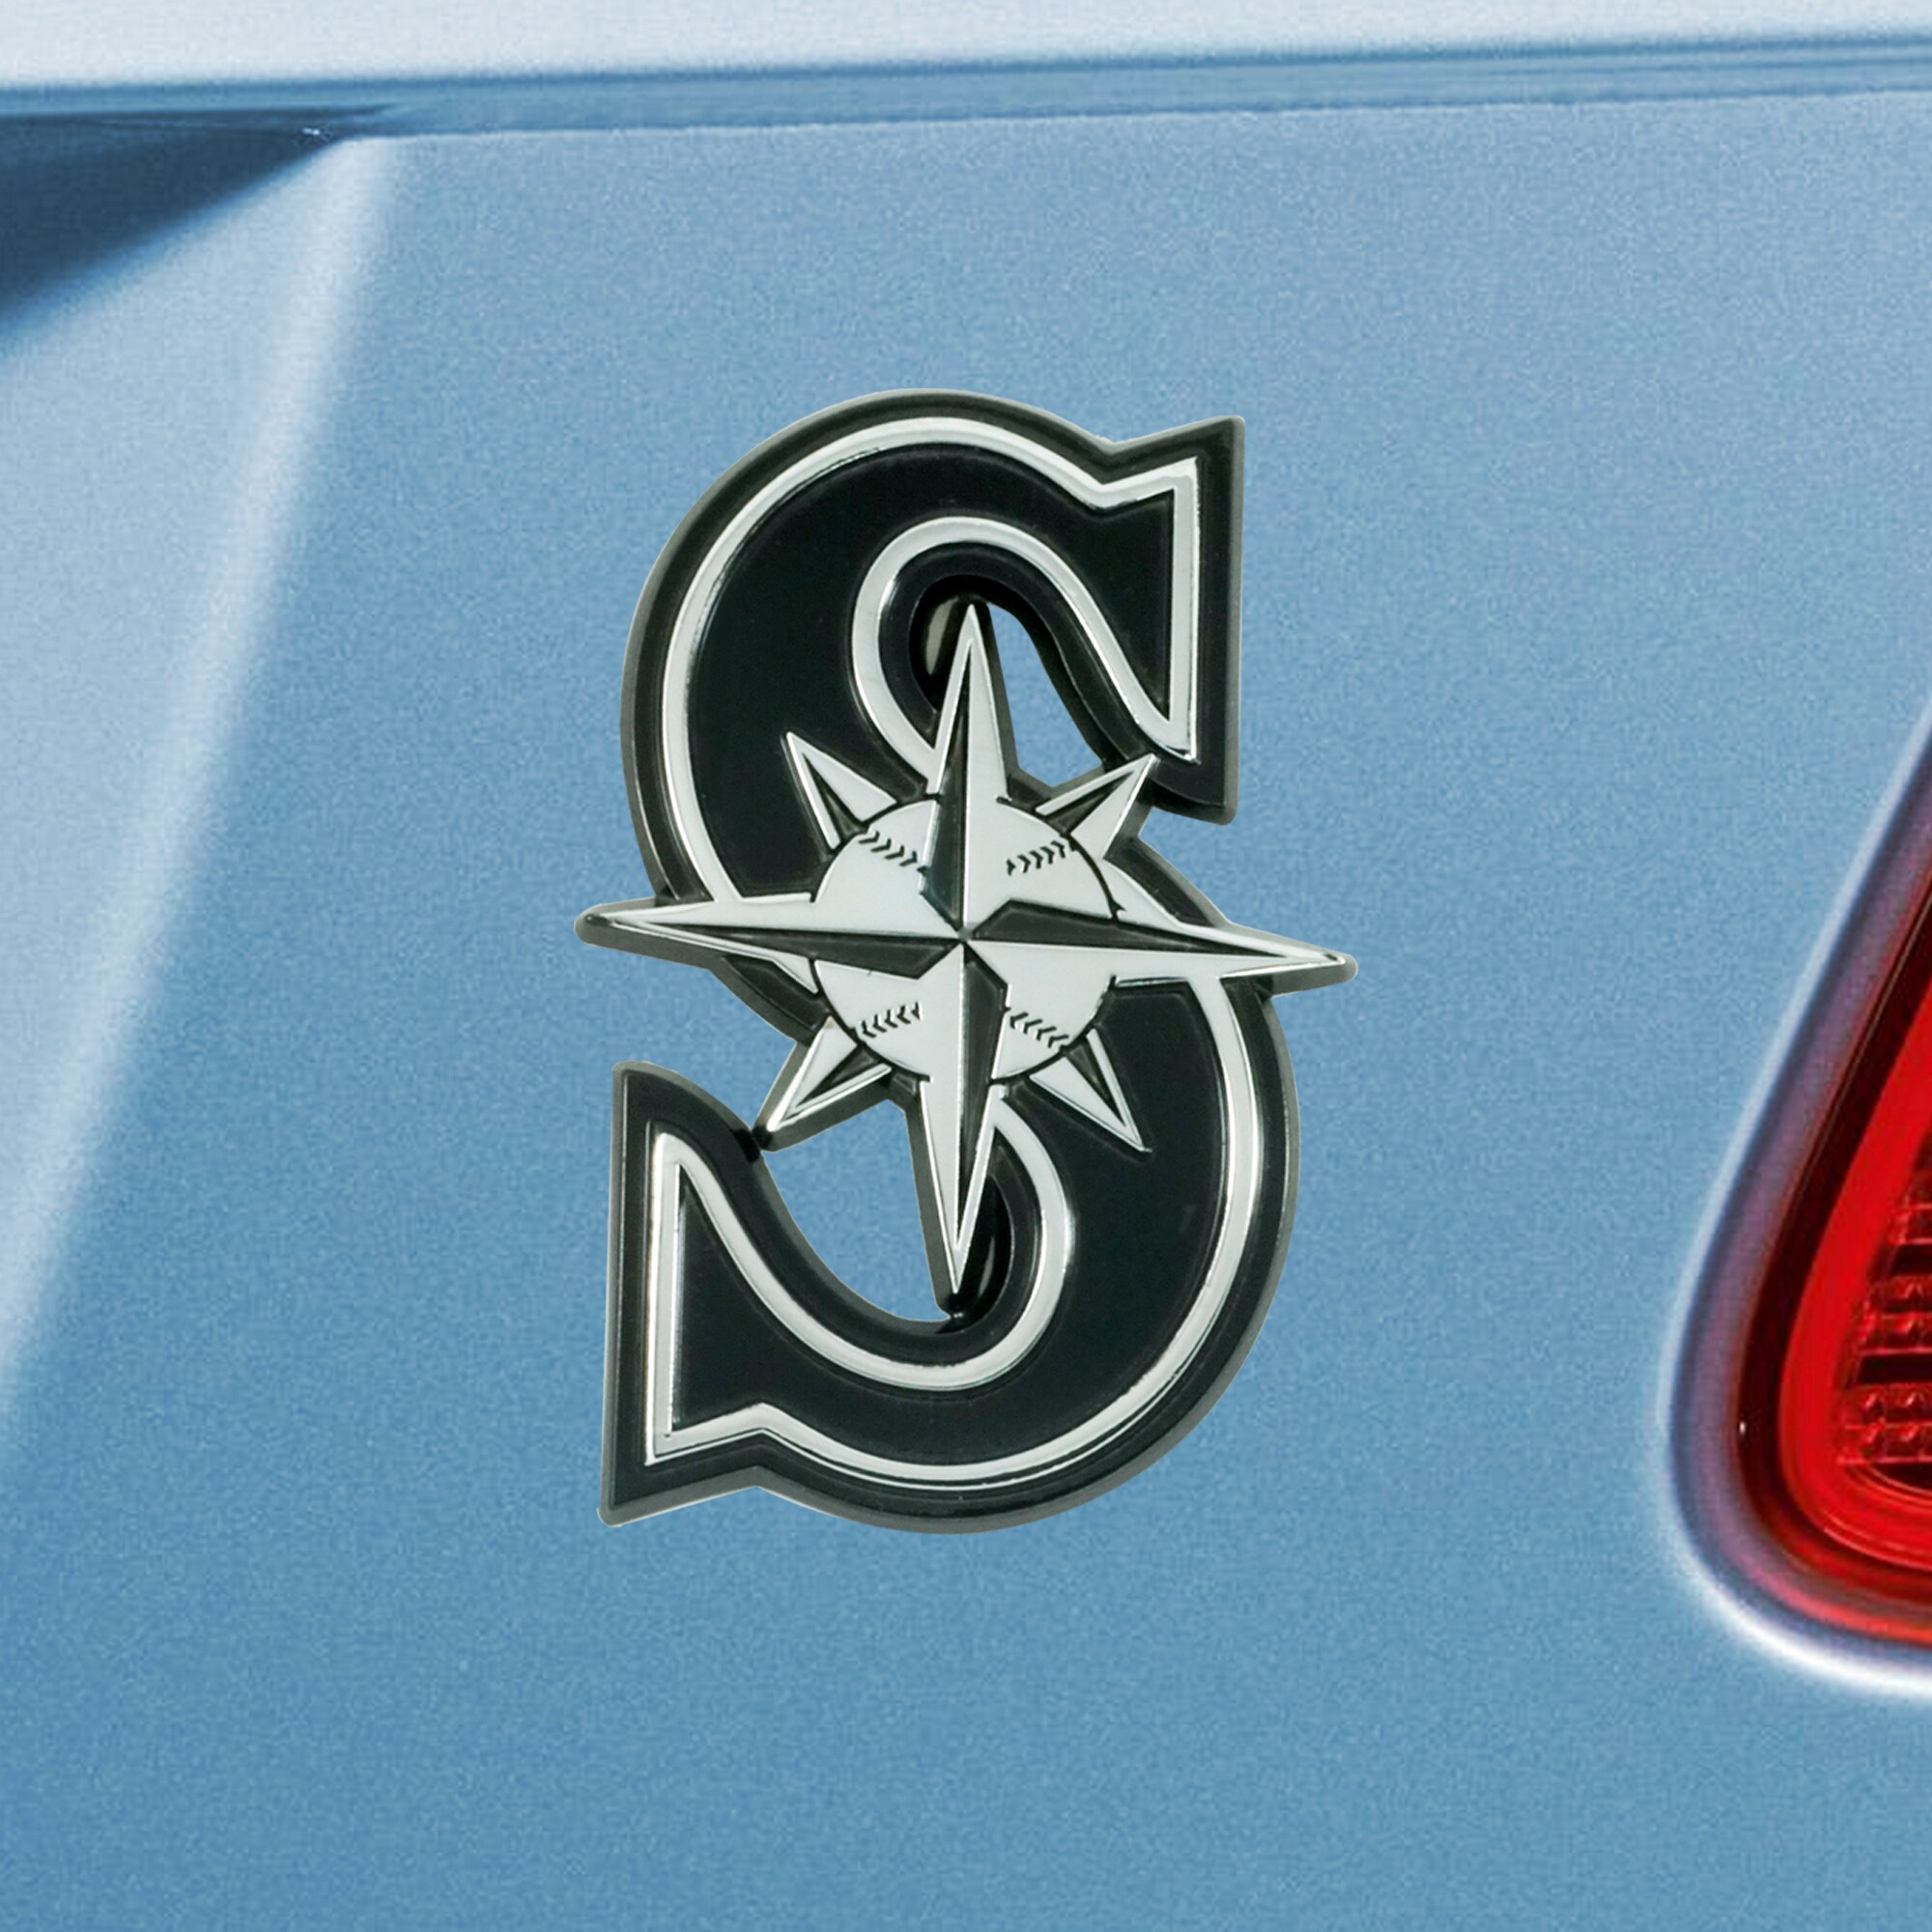 SLS FANMats Mariners Premium Aluminum Metal Color Chrome Auto Emblem Raised Die Cut Badge Decal Baseball 